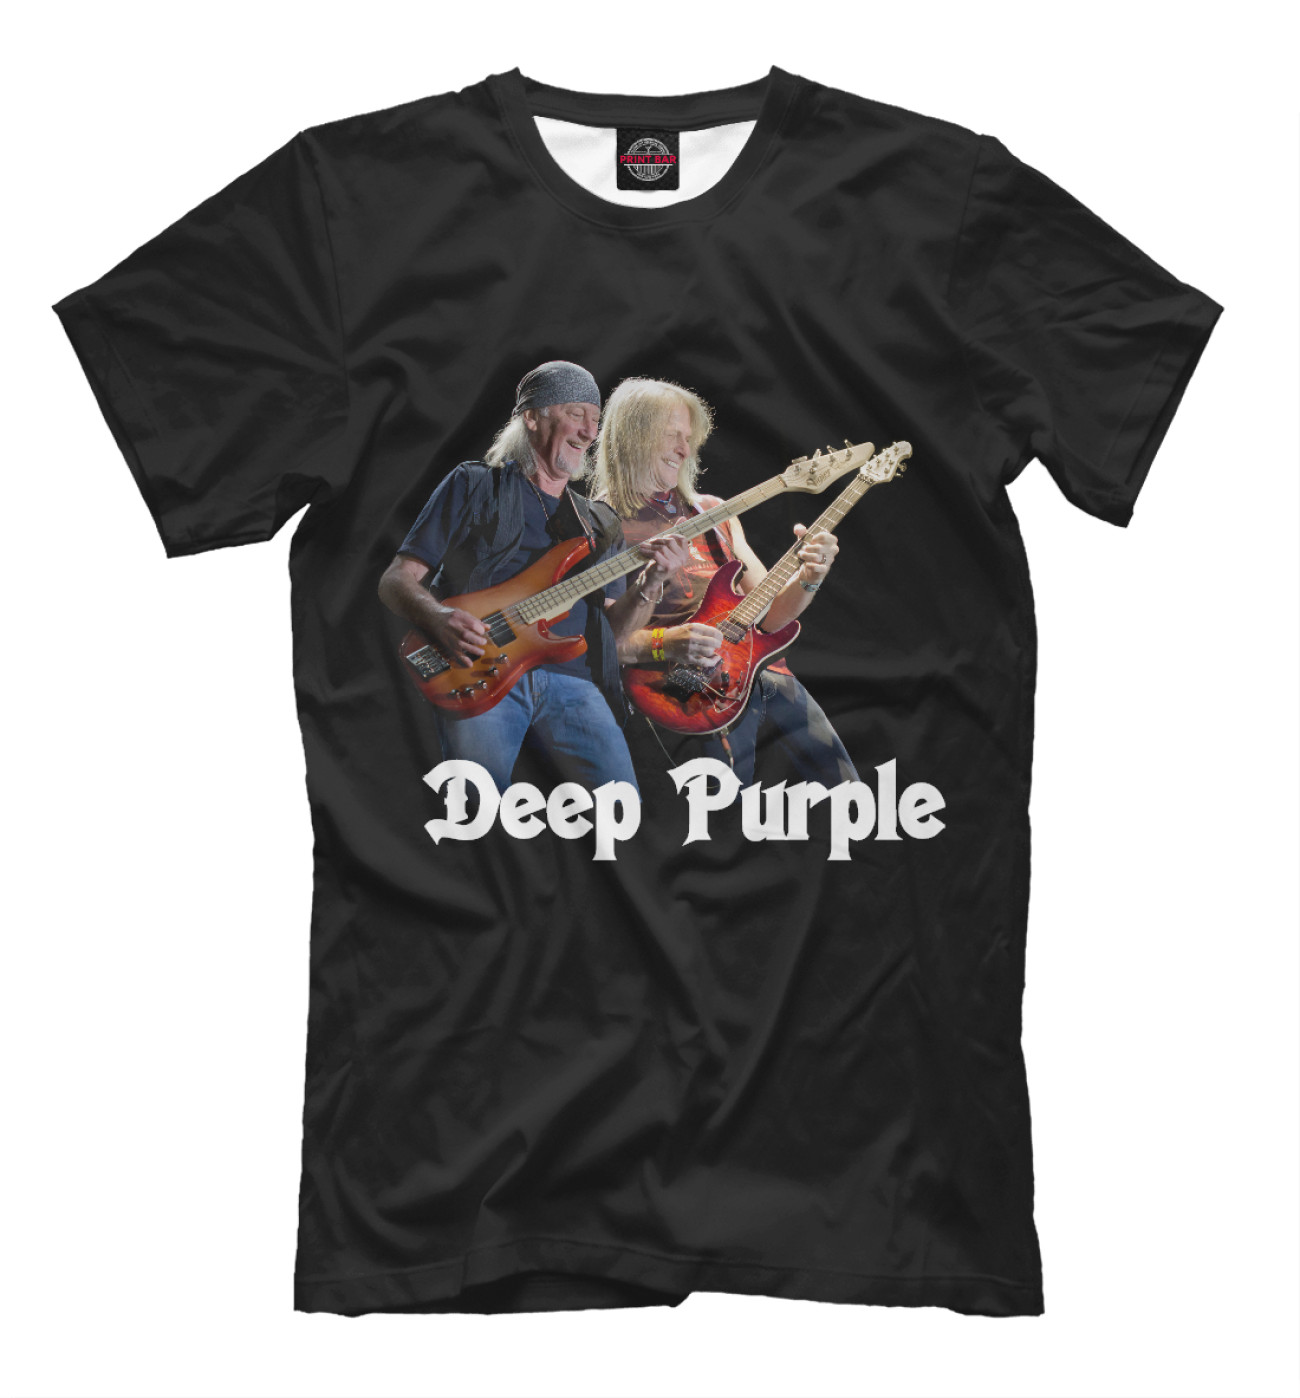 Мужская Футболка Deep Purple, артикул: PUR-785937-fut-2